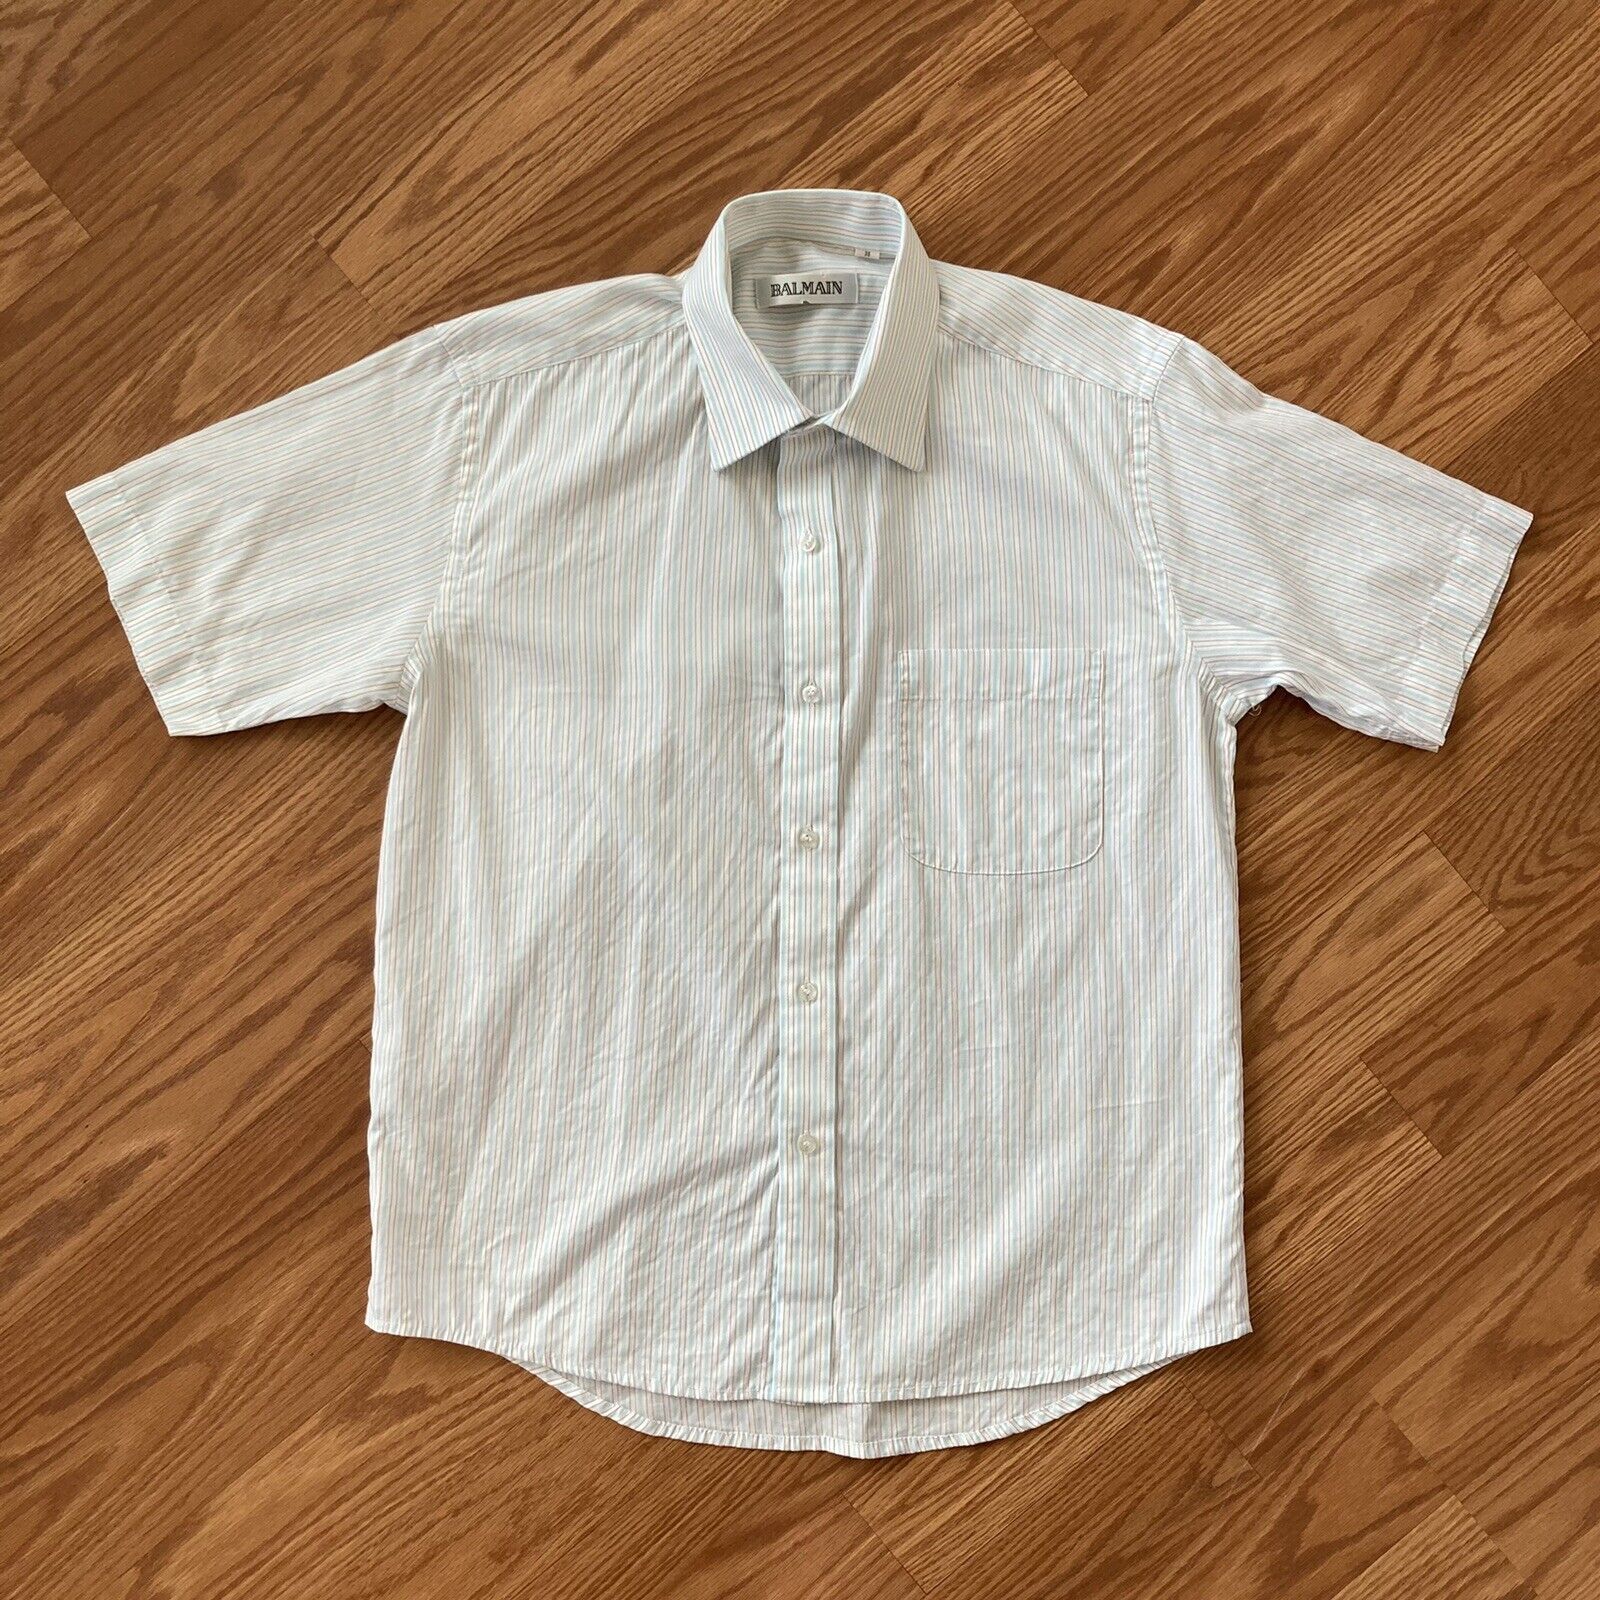 Balmain striped button collard shirt short sleeve mens size 39